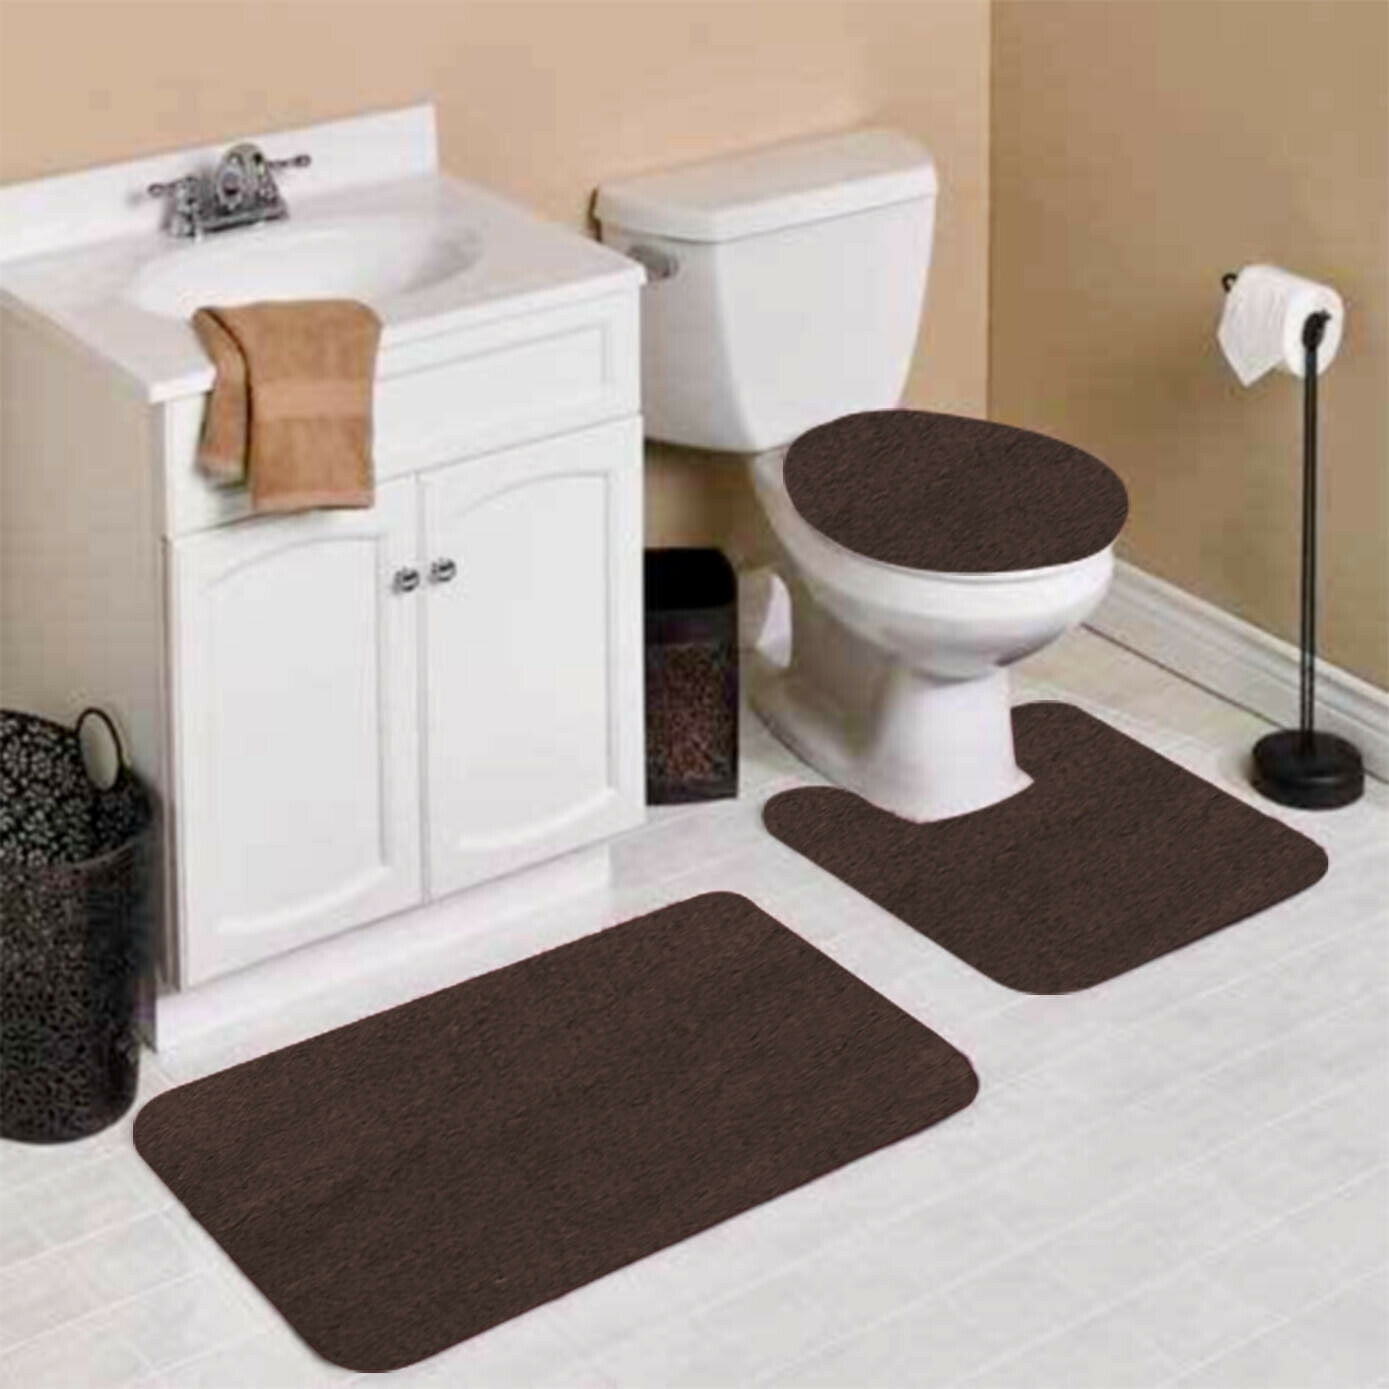 ZERO TWIST BATH MAT SET Pedestal Non Slip Super Soft Toilet Bathroom Rug 2PC 